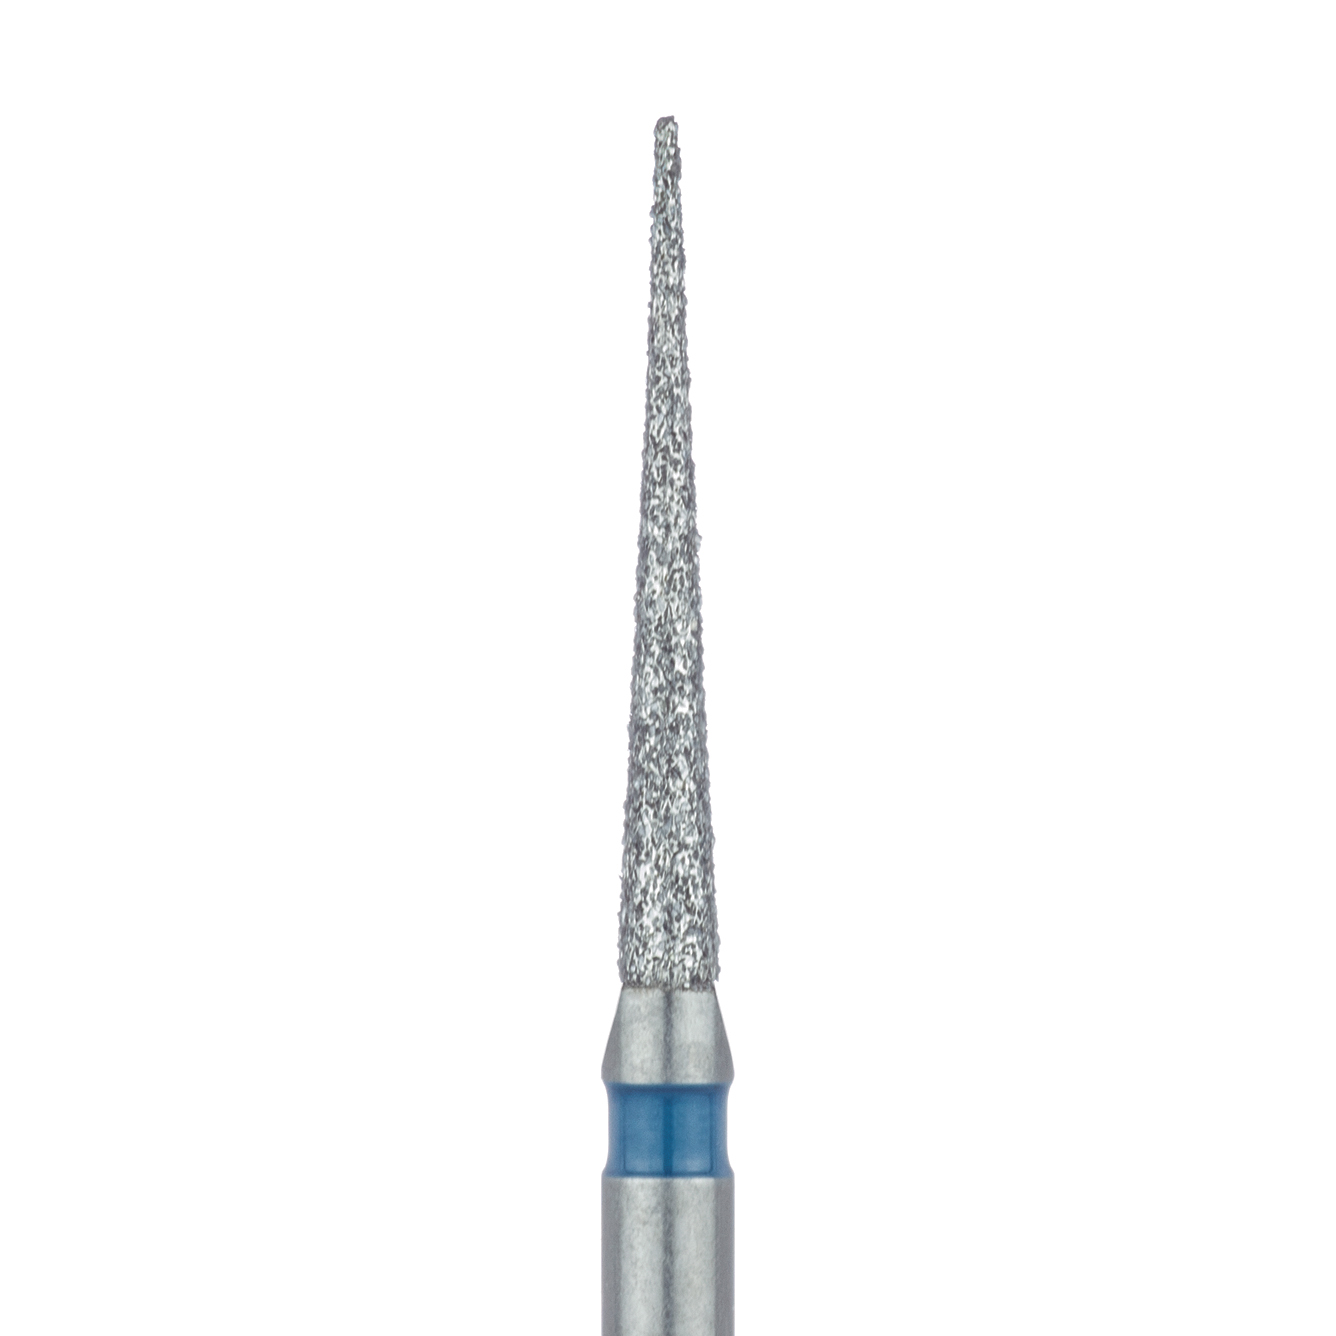 859-012-FG Long Needle Diamond Bur, Interproximal Reduction, 1.2mm Ø, Medium, FG